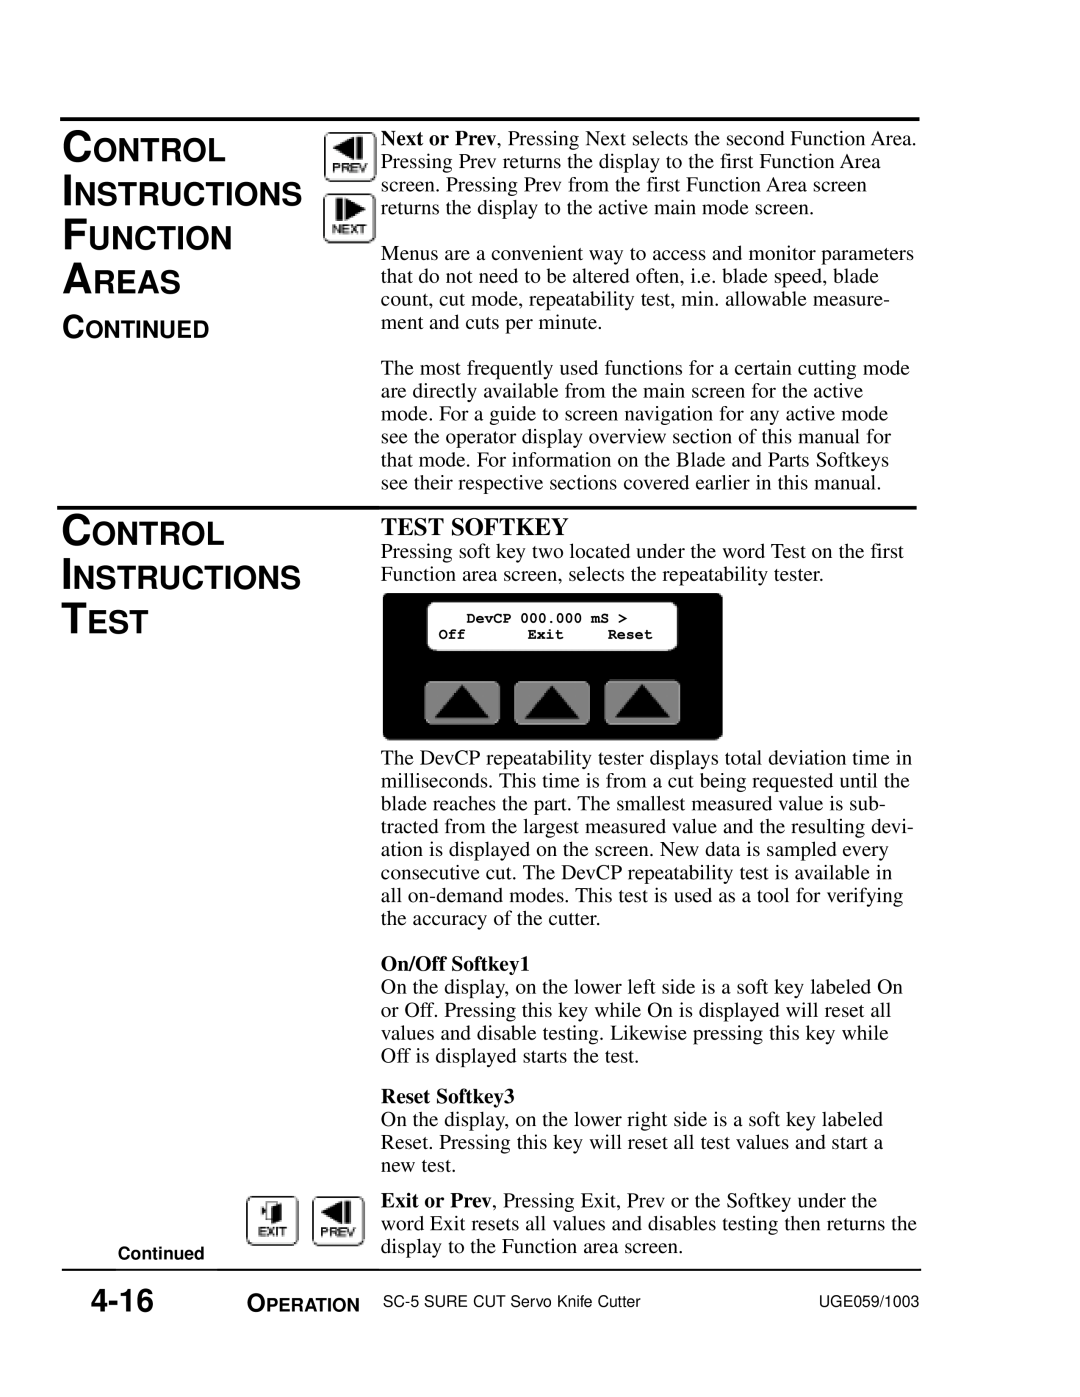 Conair SC-5 manual Control Instructions Function Areas, Control Instructions Test, 4-16, Continued, On/Off Softkey1 